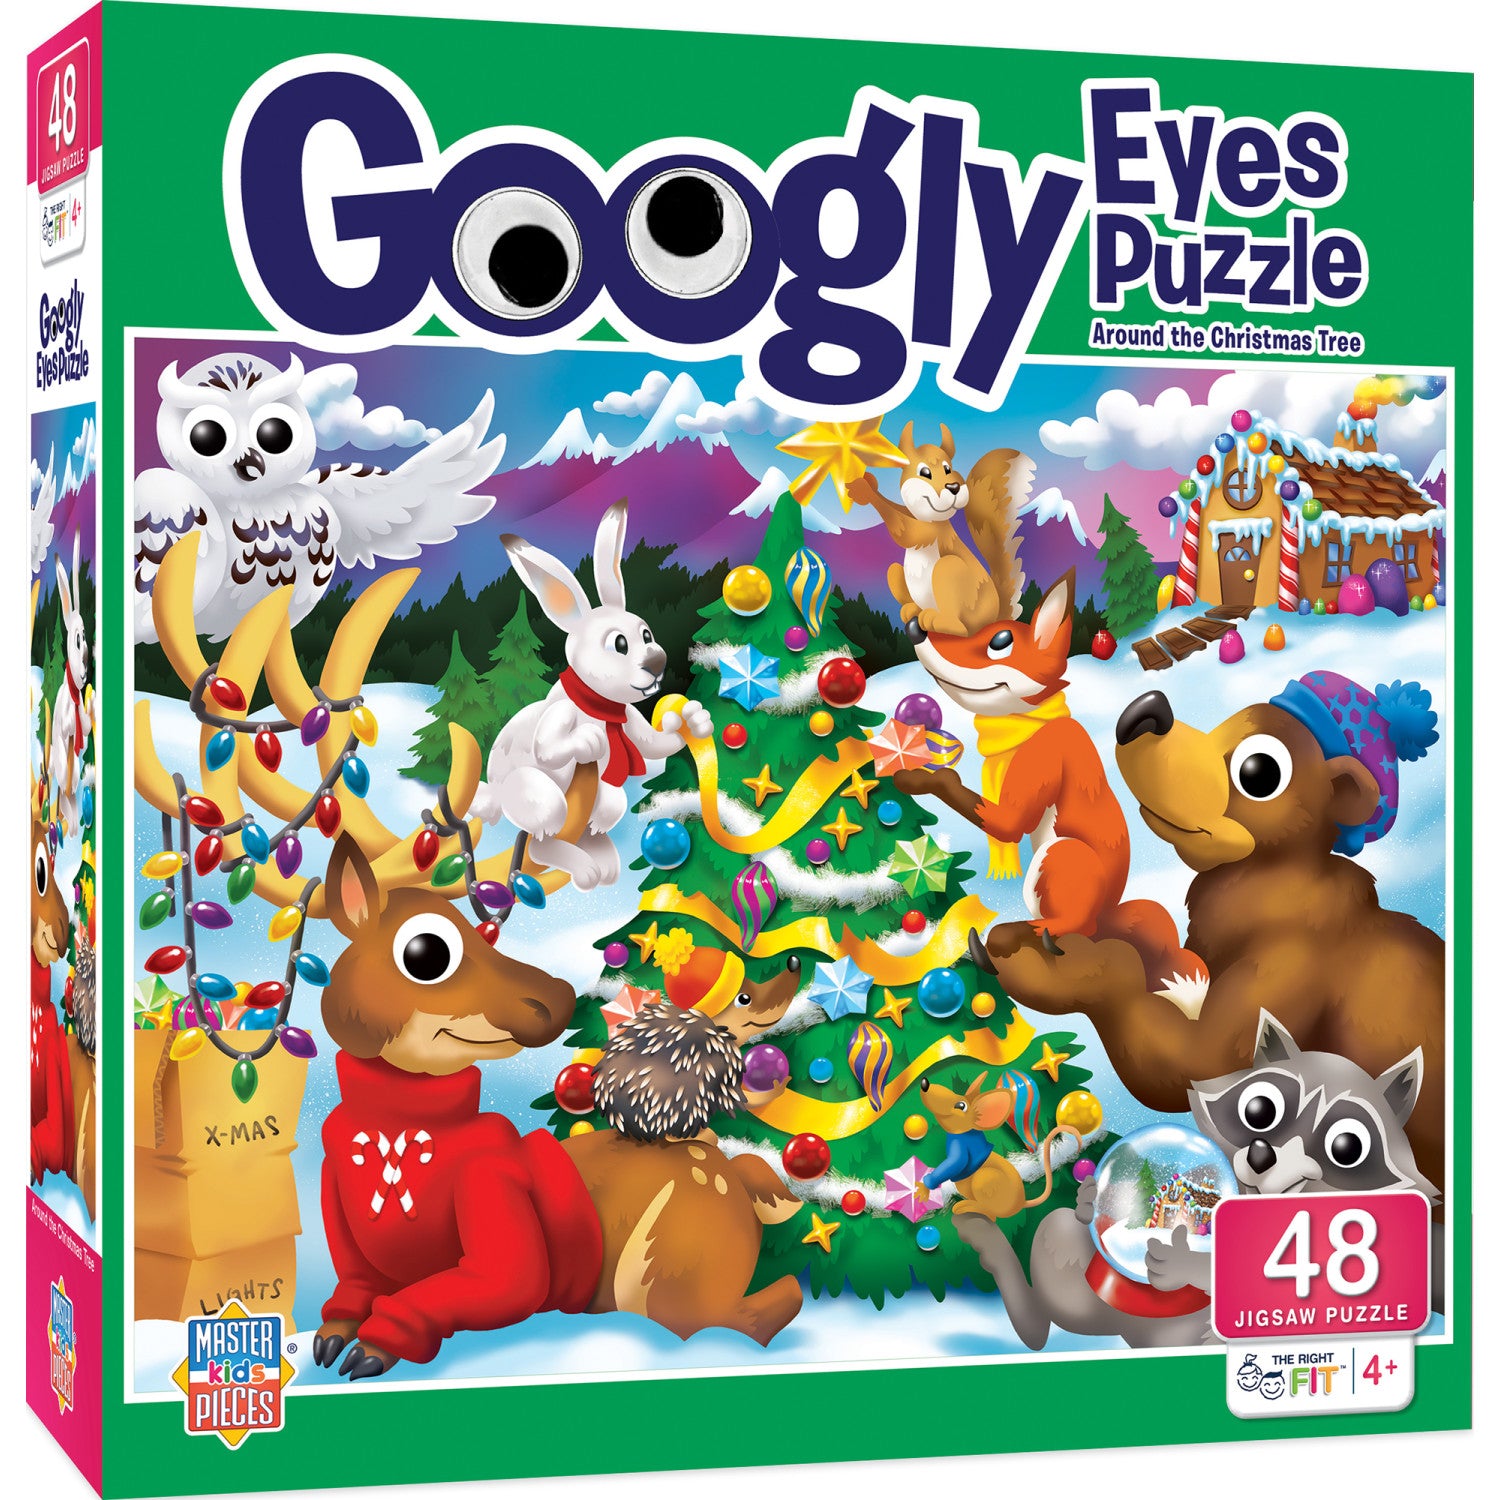 Googly Eyes - Around the Christmas Tree 48 Piece Jigsaw Puzzle